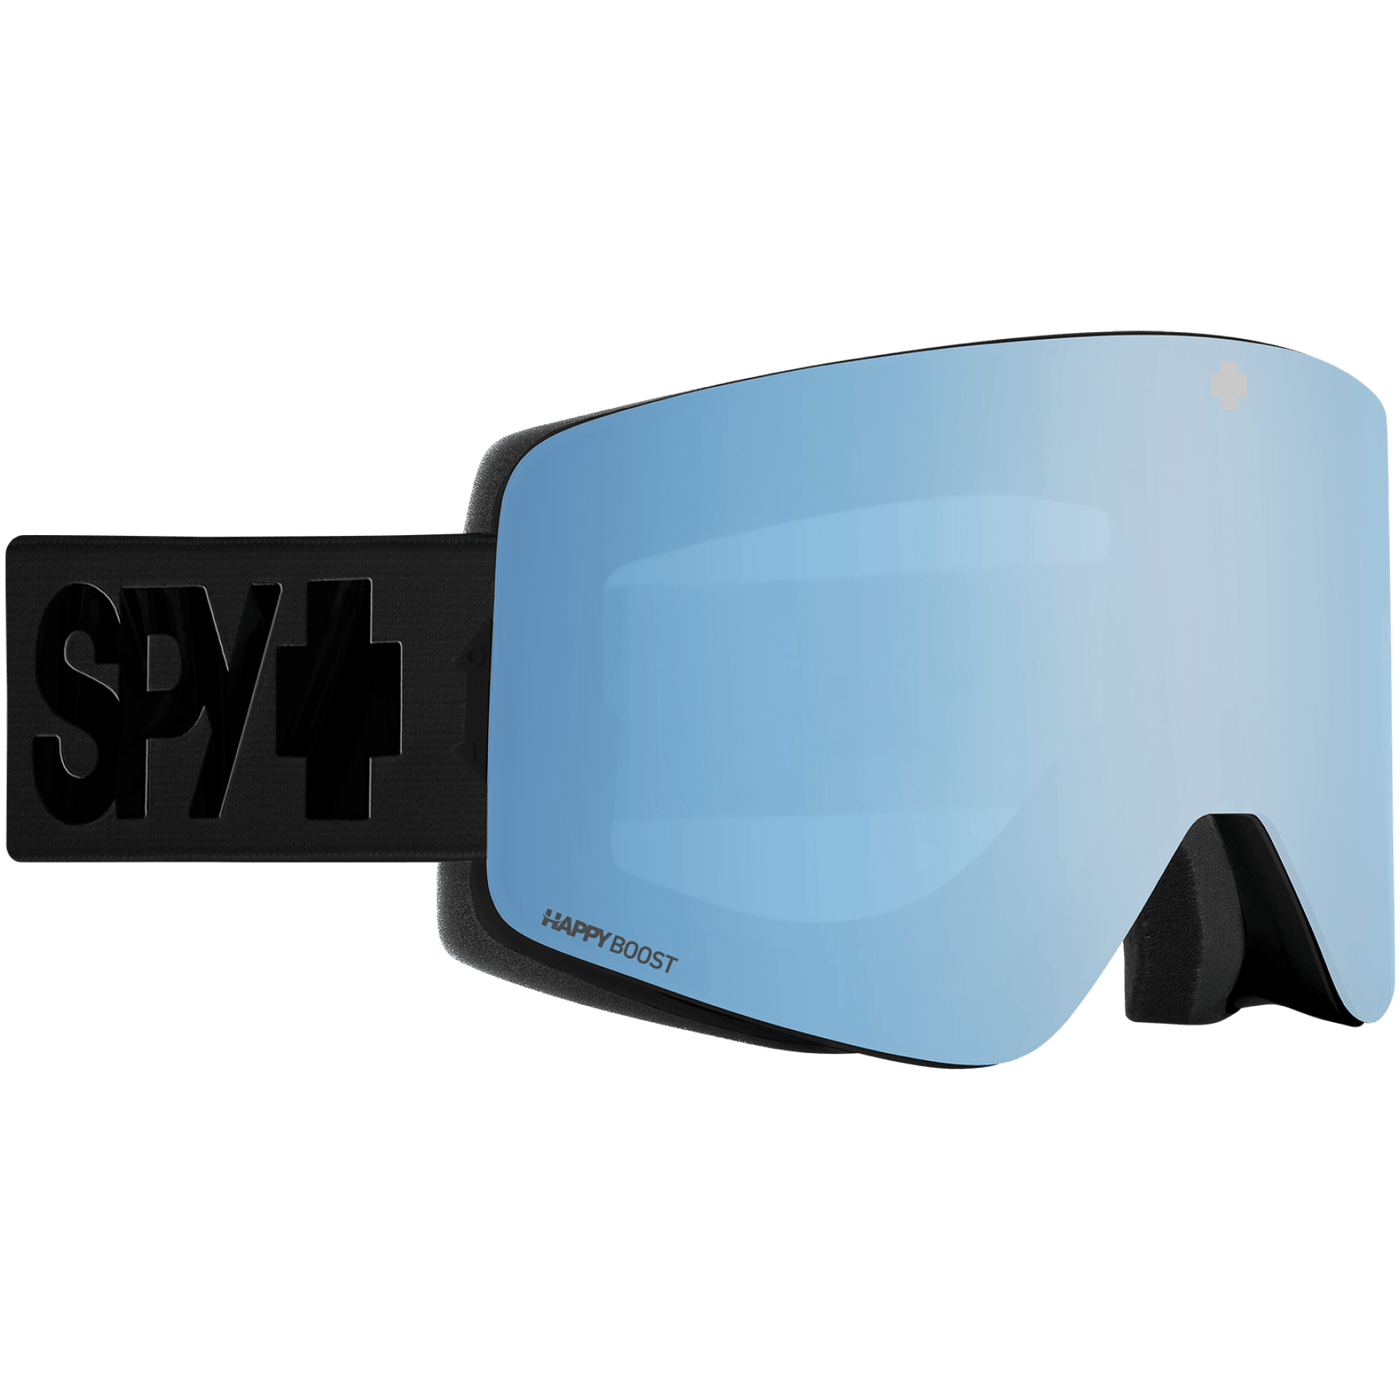 SPY Marauder SE Matte Black Snow Goggles - Happy Boost Lens